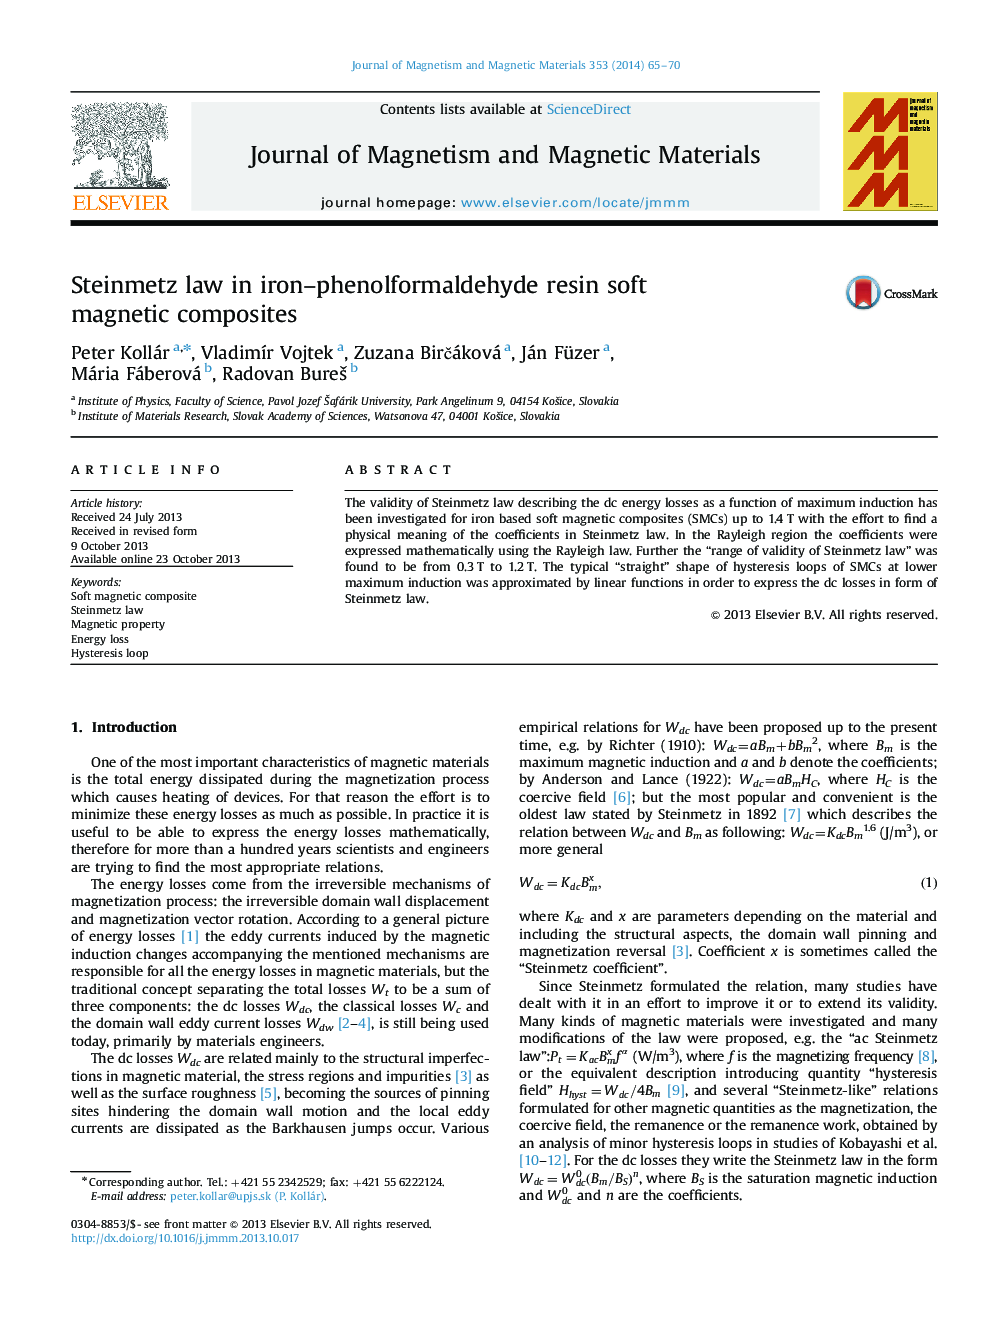 Steinmetz law in iron-phenolformaldehyde resin soft magnetic composites